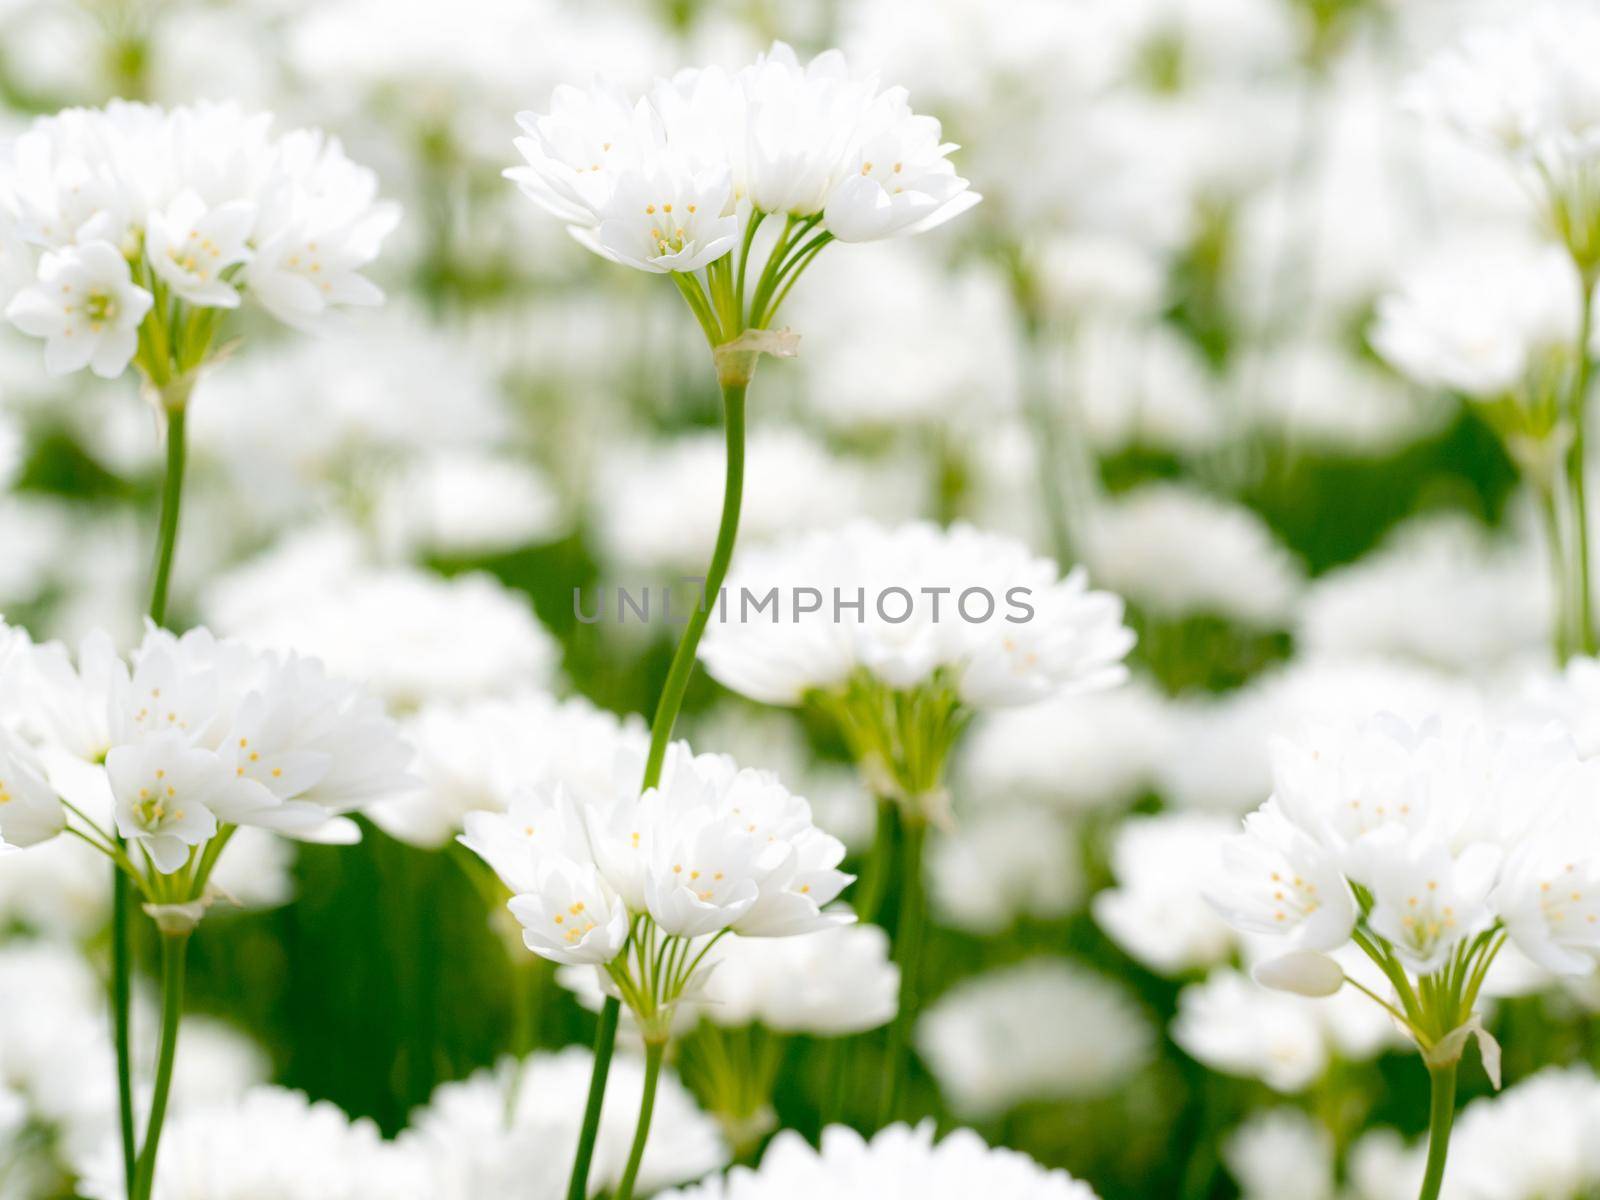 White flowers of Allium zebdanense.